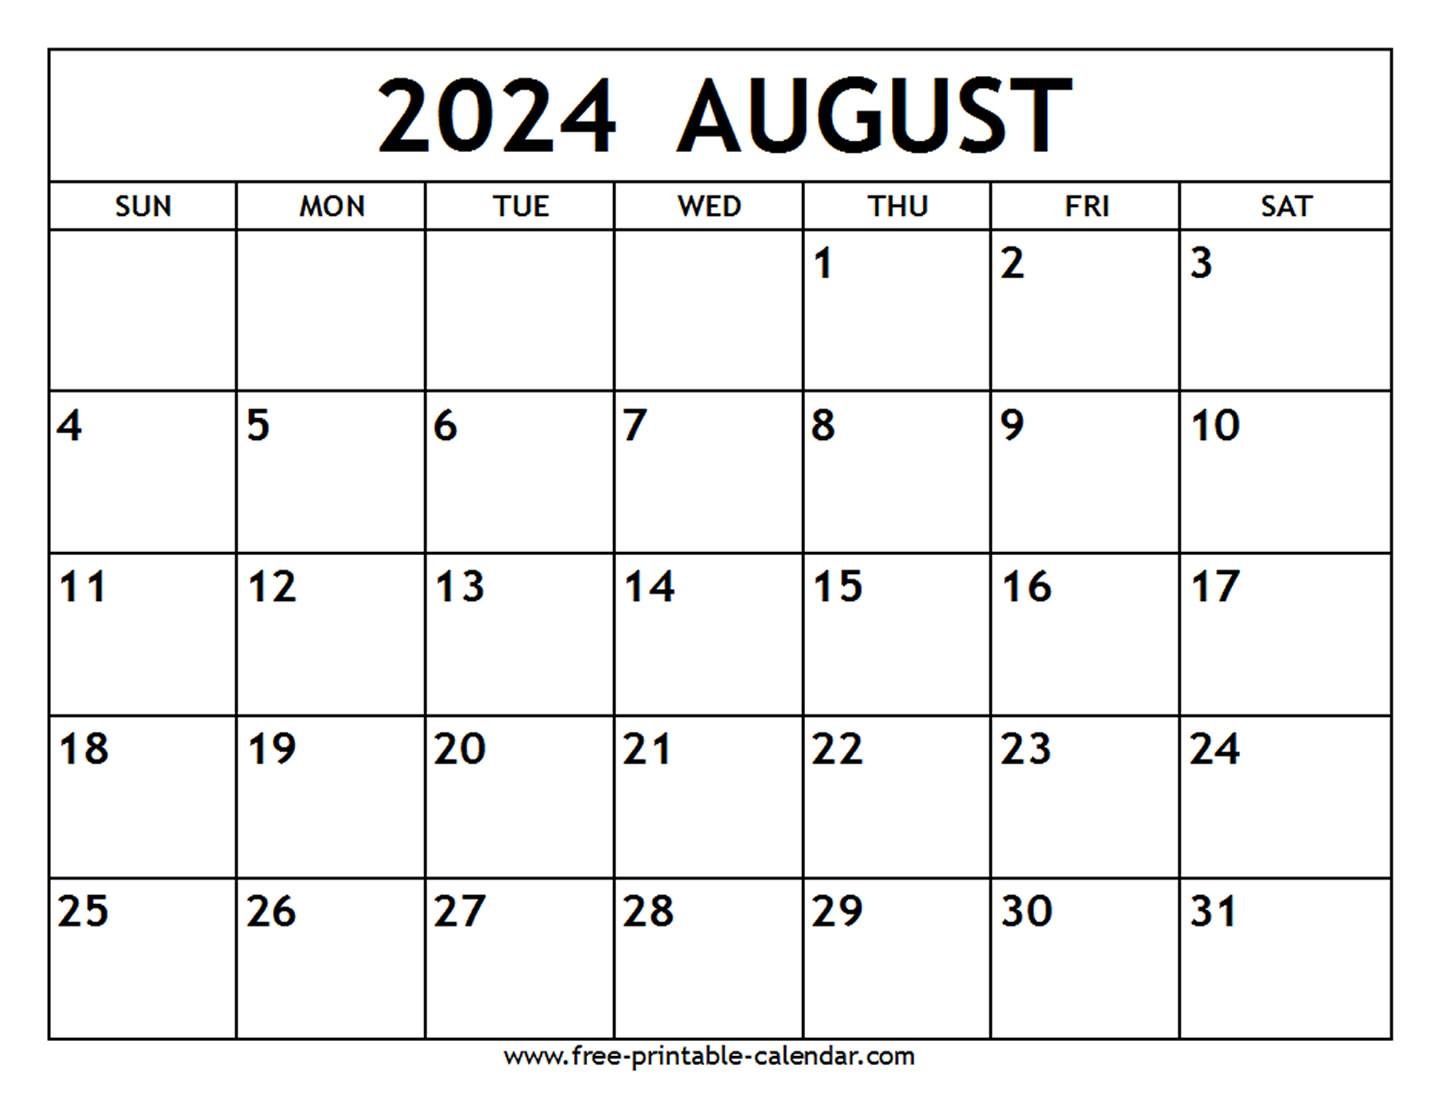 August 2024 Calendar - Free-Printable-Calendar in Free Printable August 2024 Calendar Canada